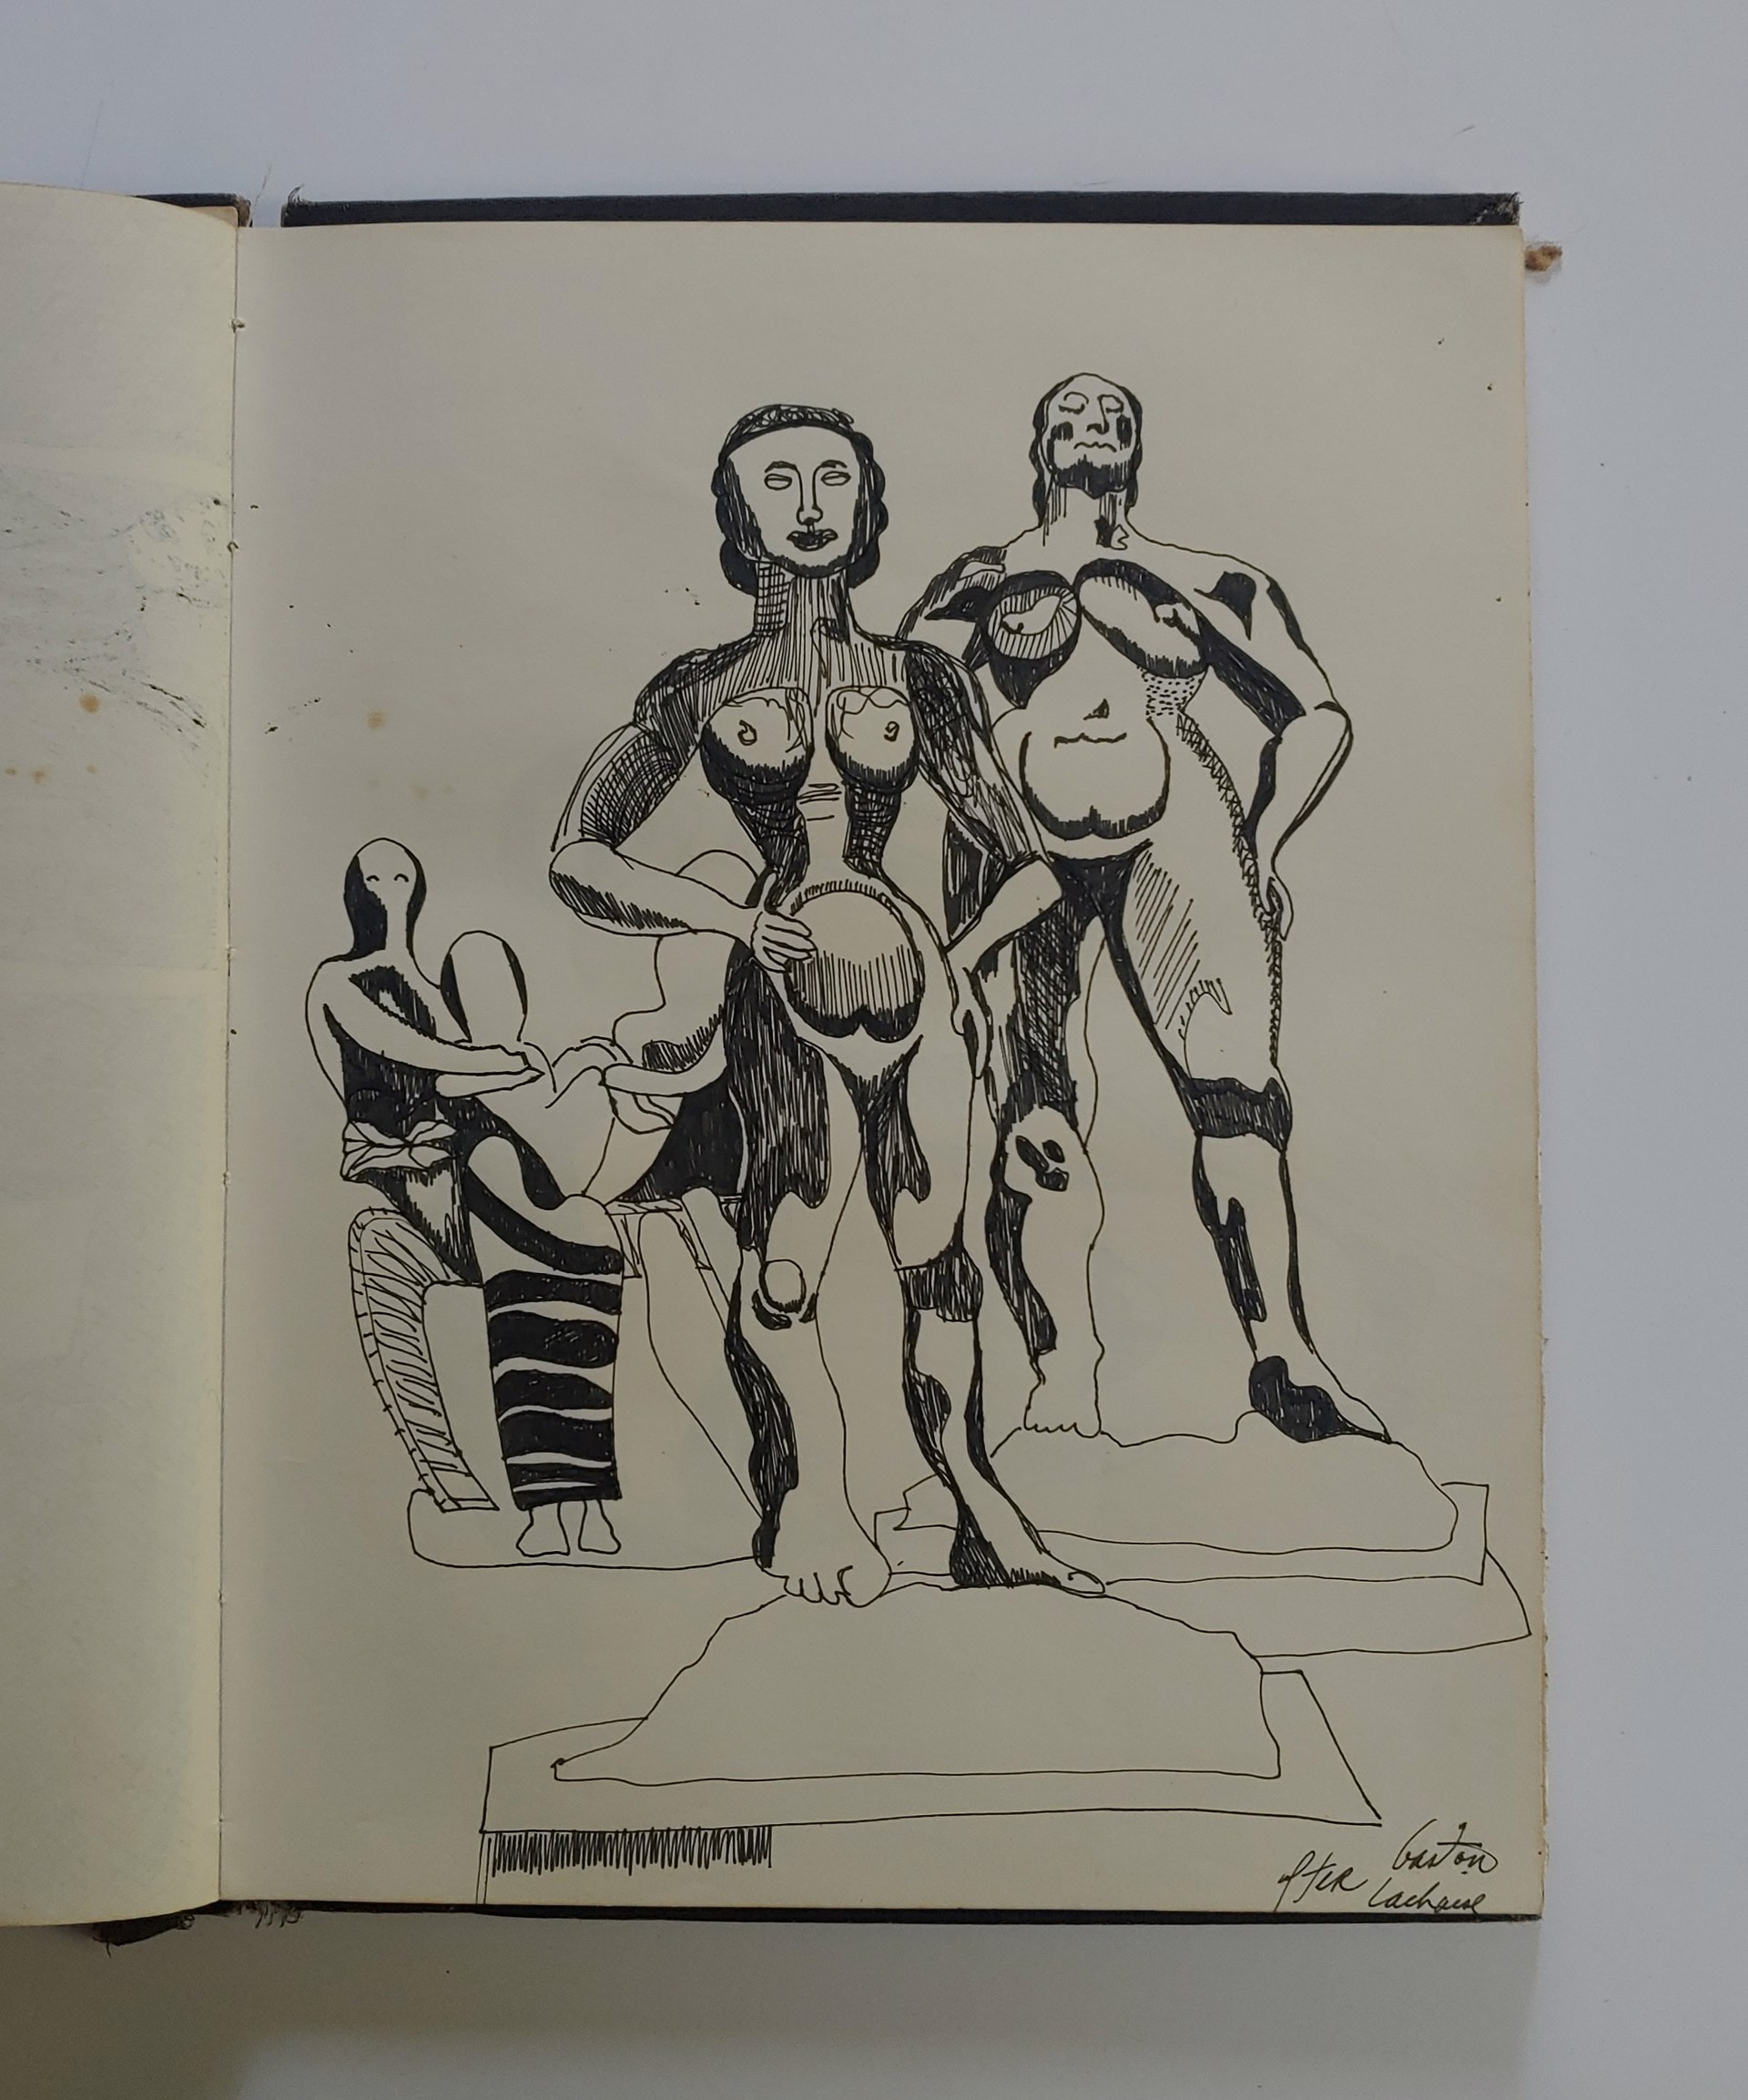 Undated Hardcover Sketchbook by David Amdur